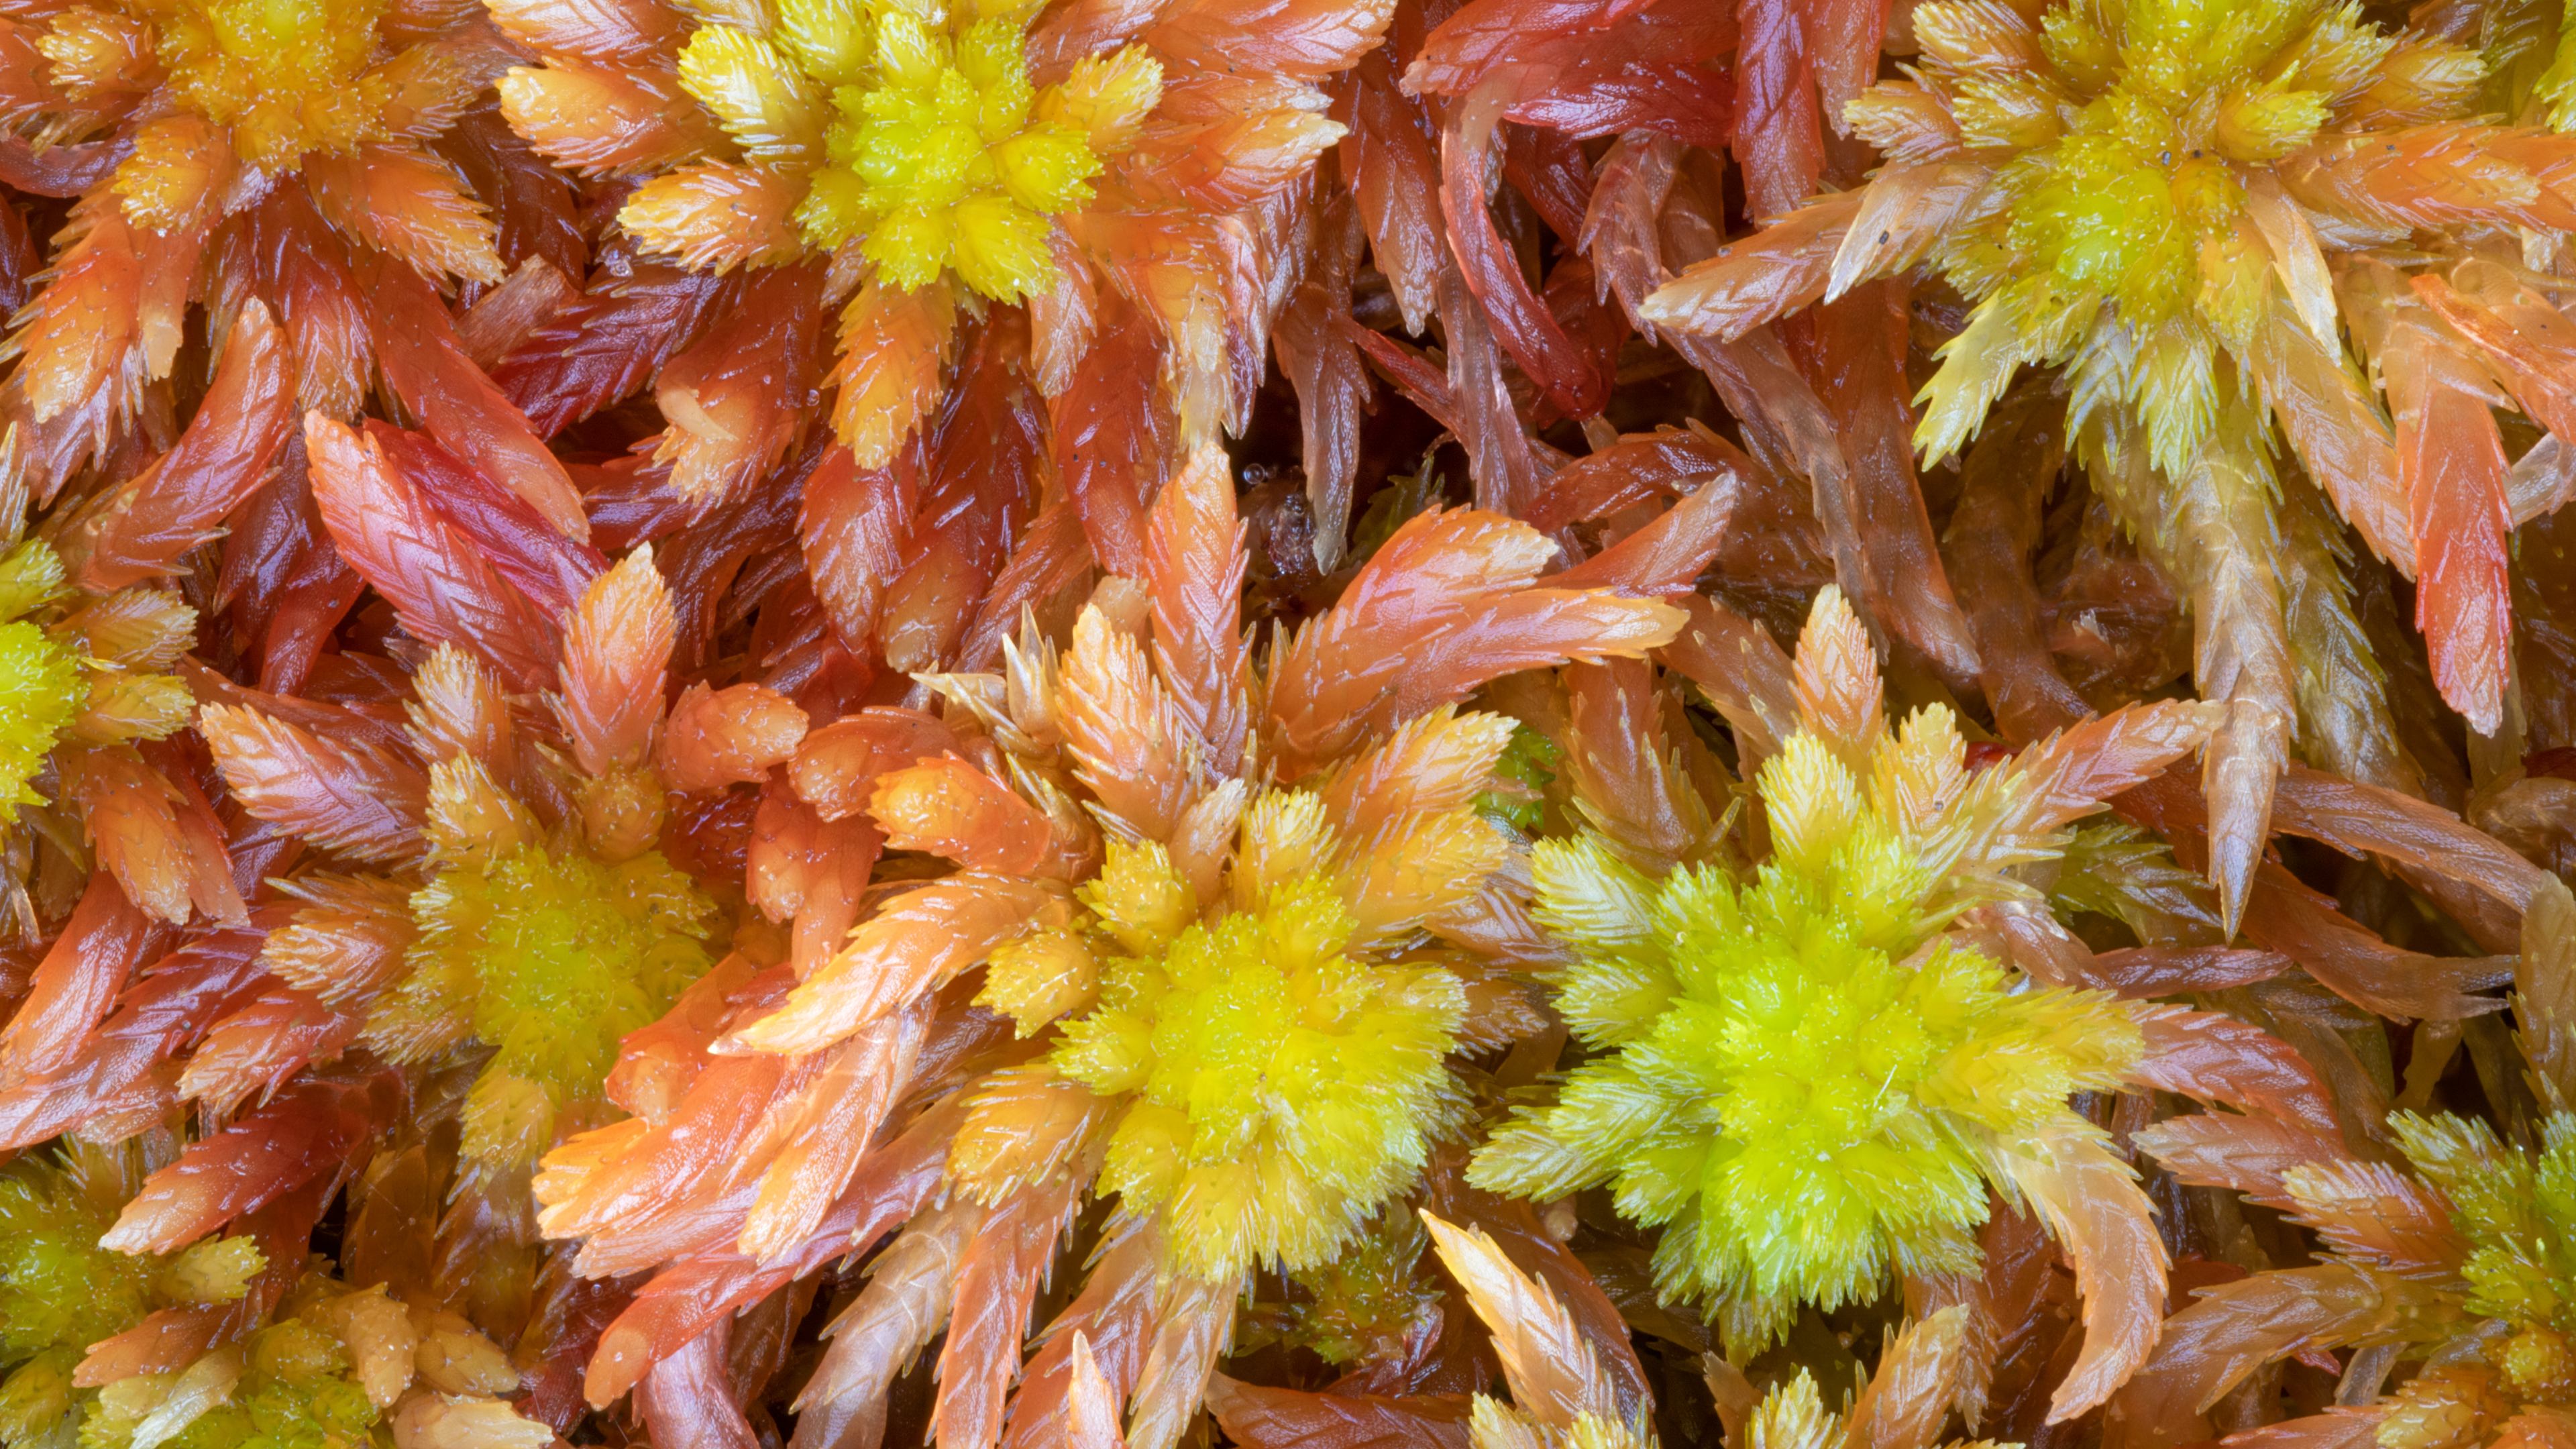 A close up of sphagnum moss